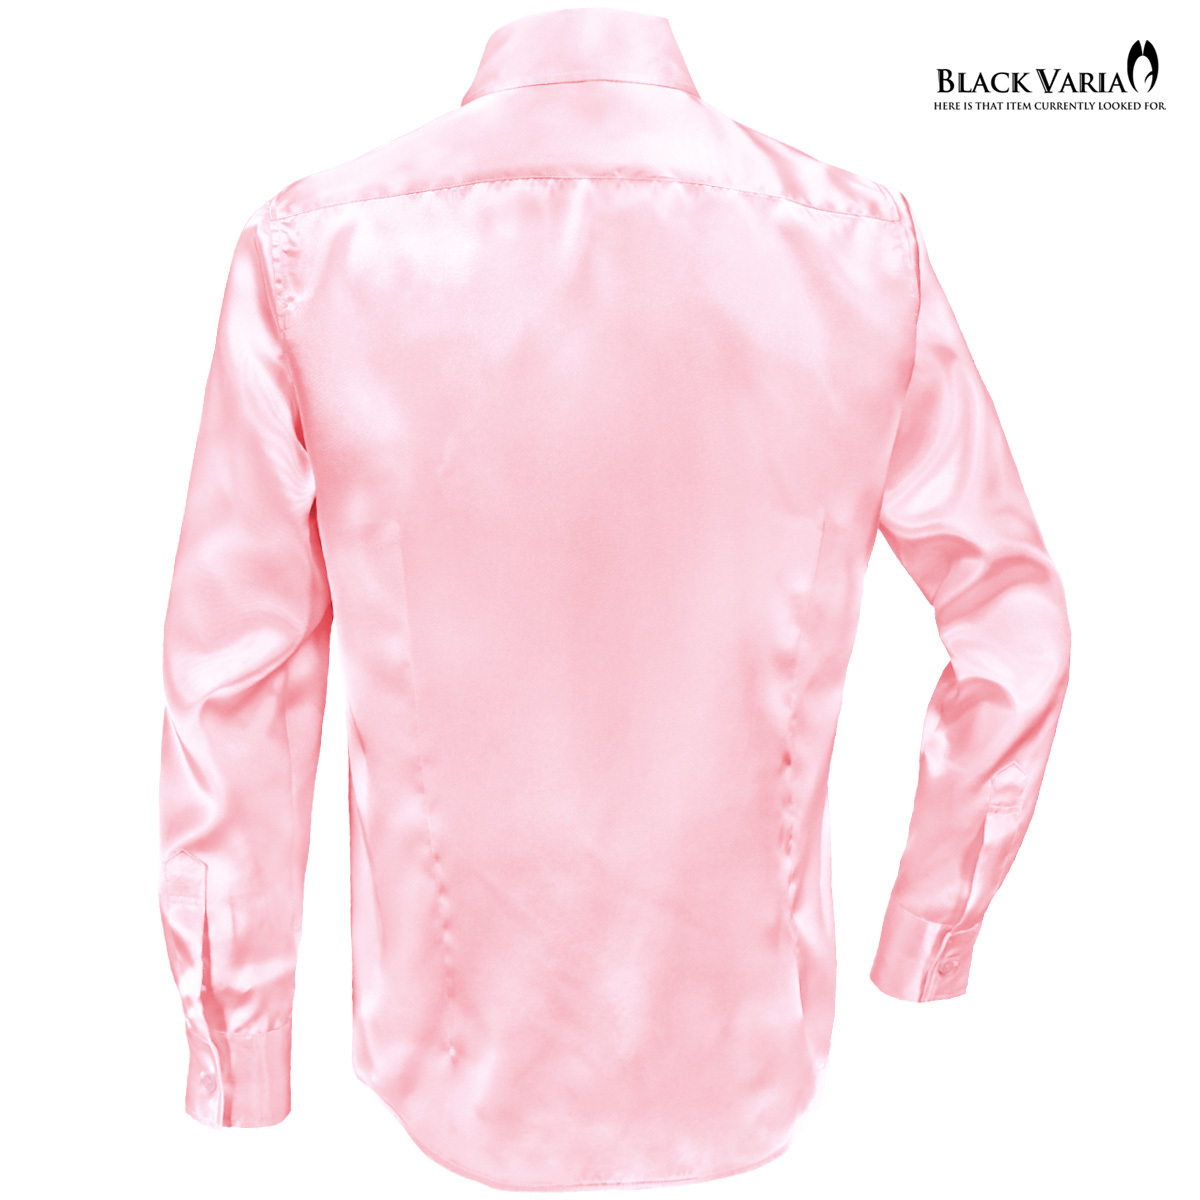  specification modification SALE* cat pohs possible *141405-pk2 BLACK VARIA lustre satin plain slim regular color dress shirt men's ( light pink ) SS costume 